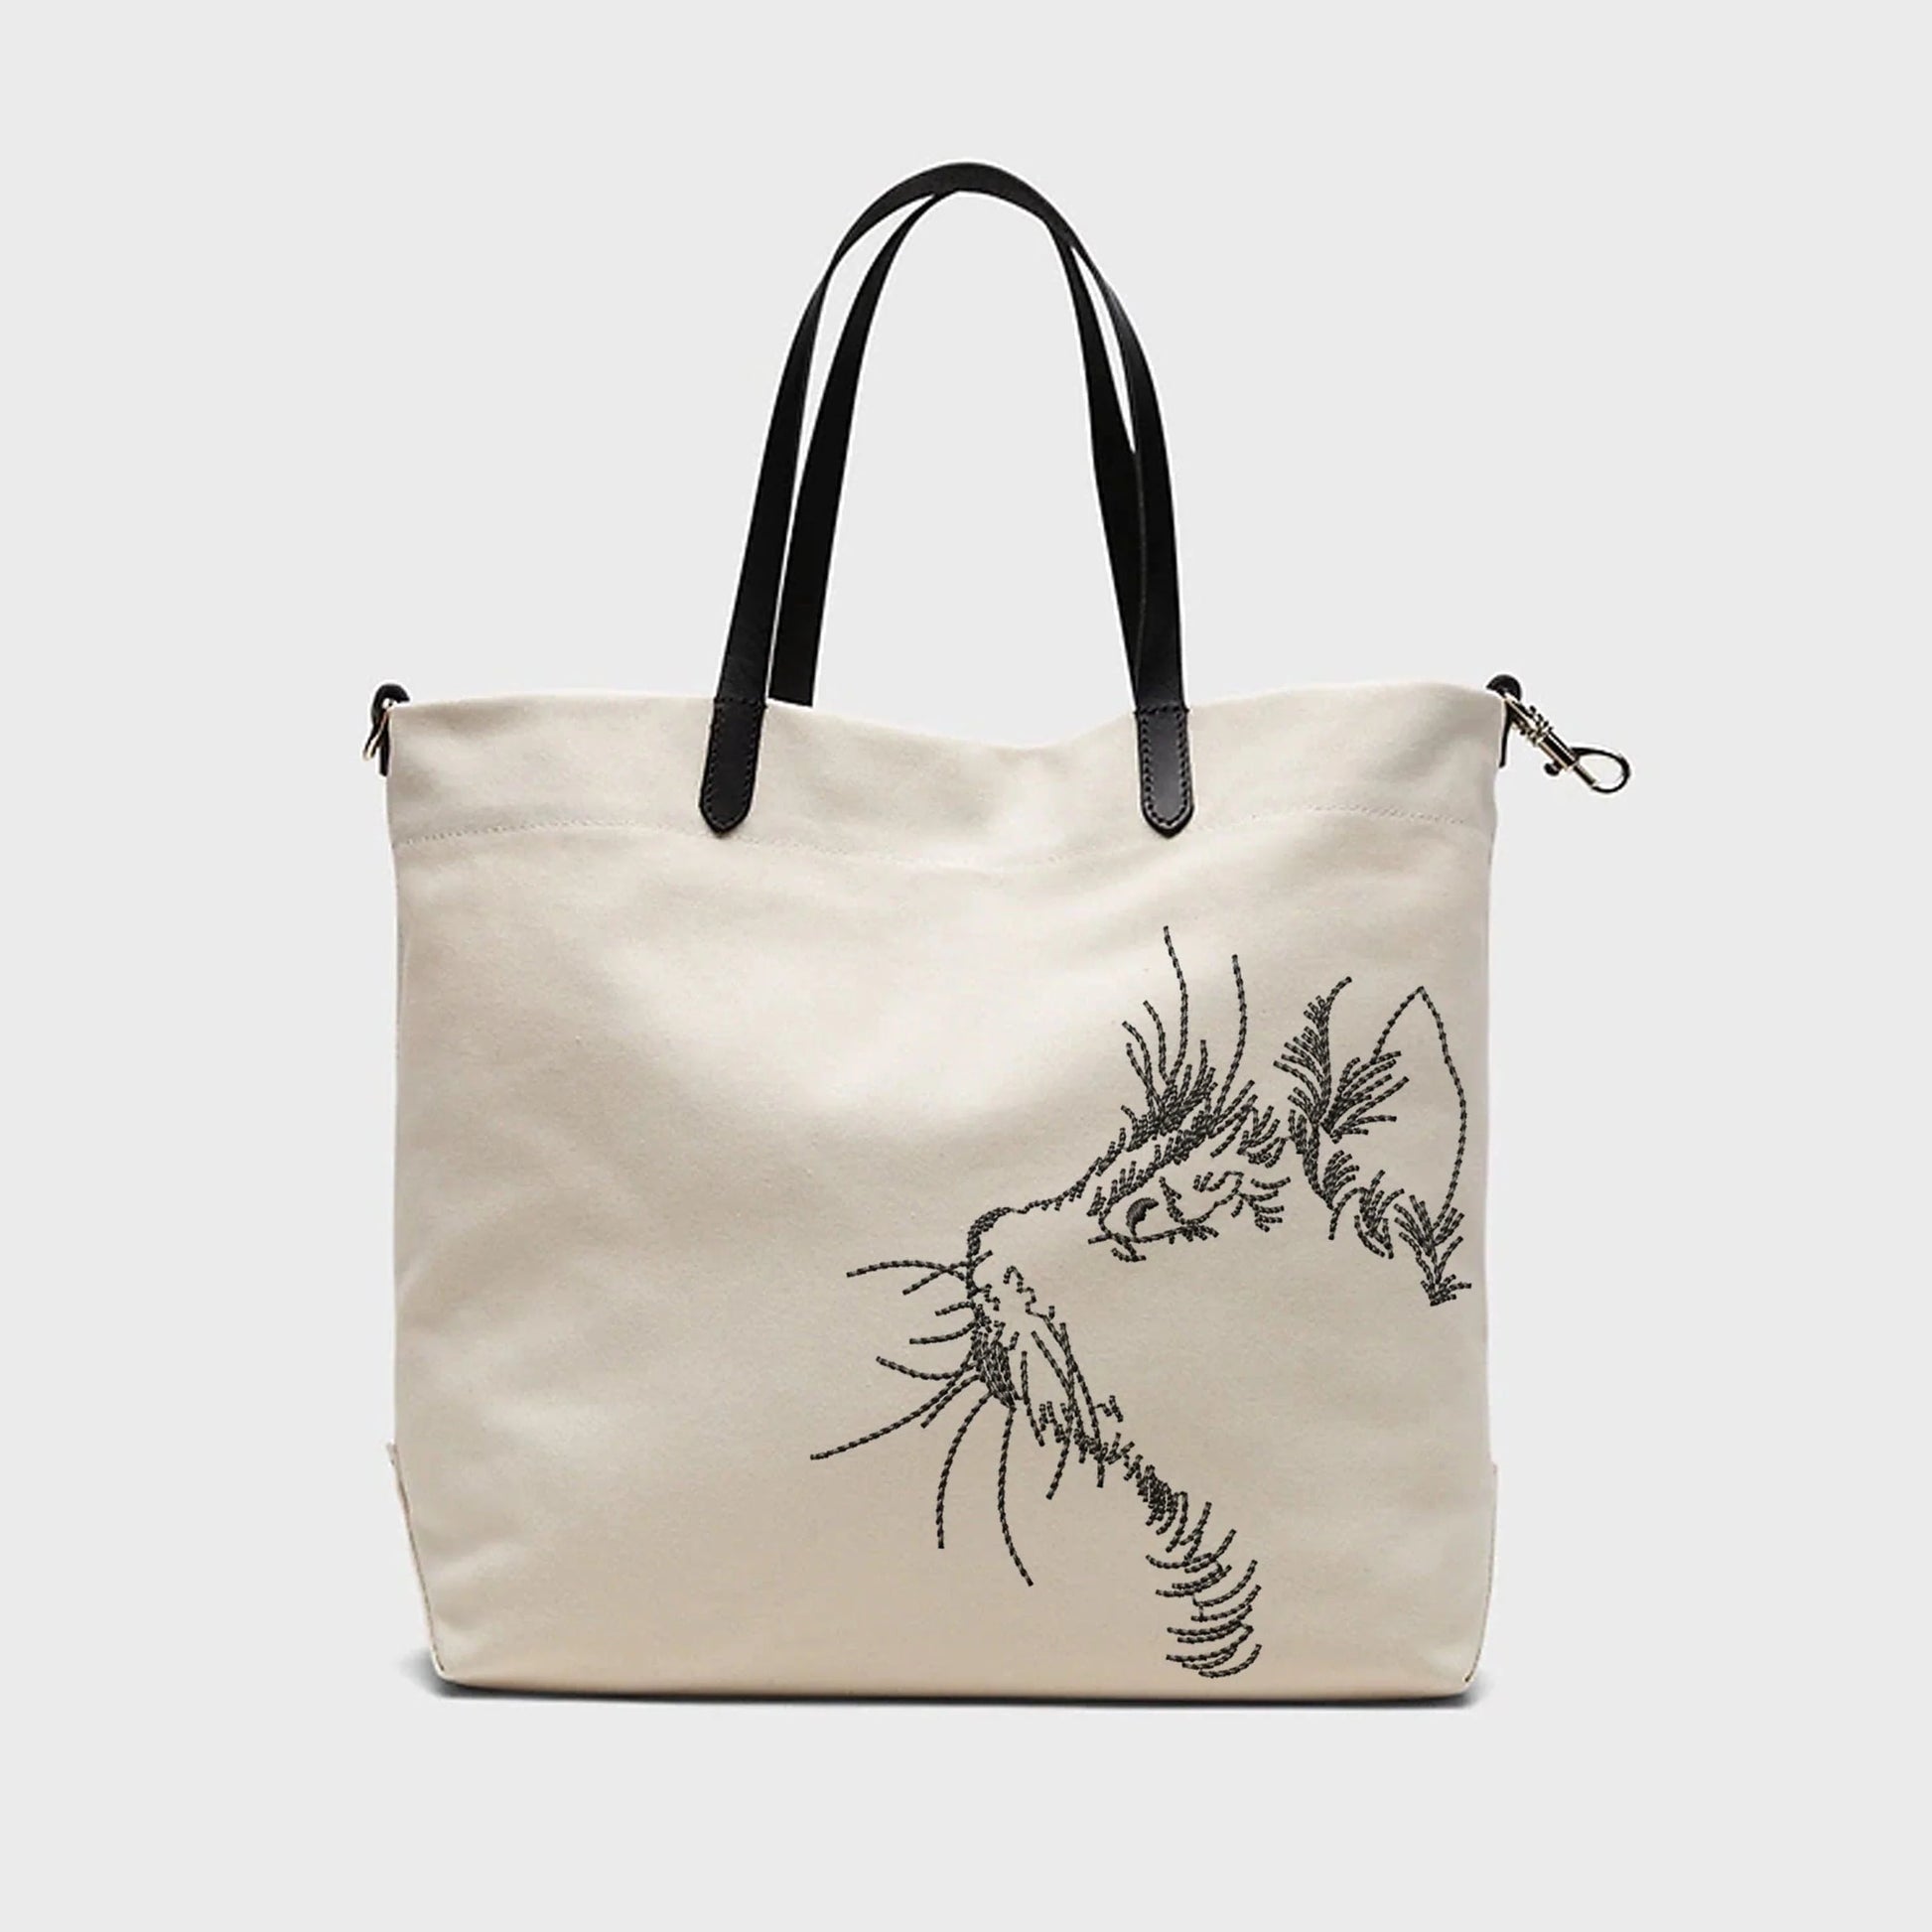 Cat Machine Embroidery Design on linen handbag